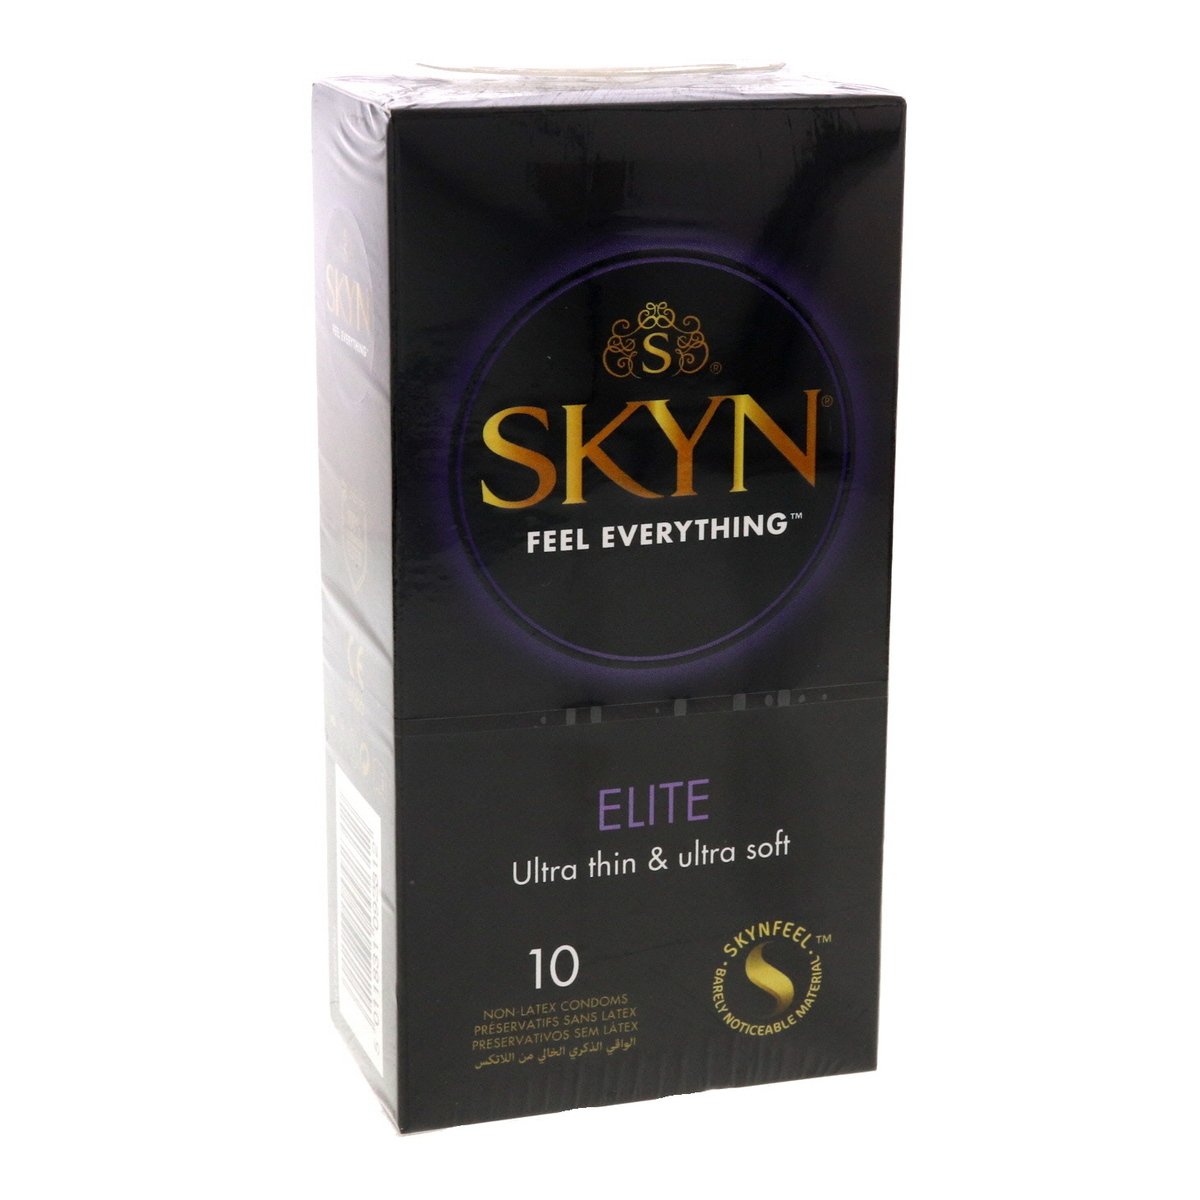 Skyn Elite Non Latex Condoms 10 pcs